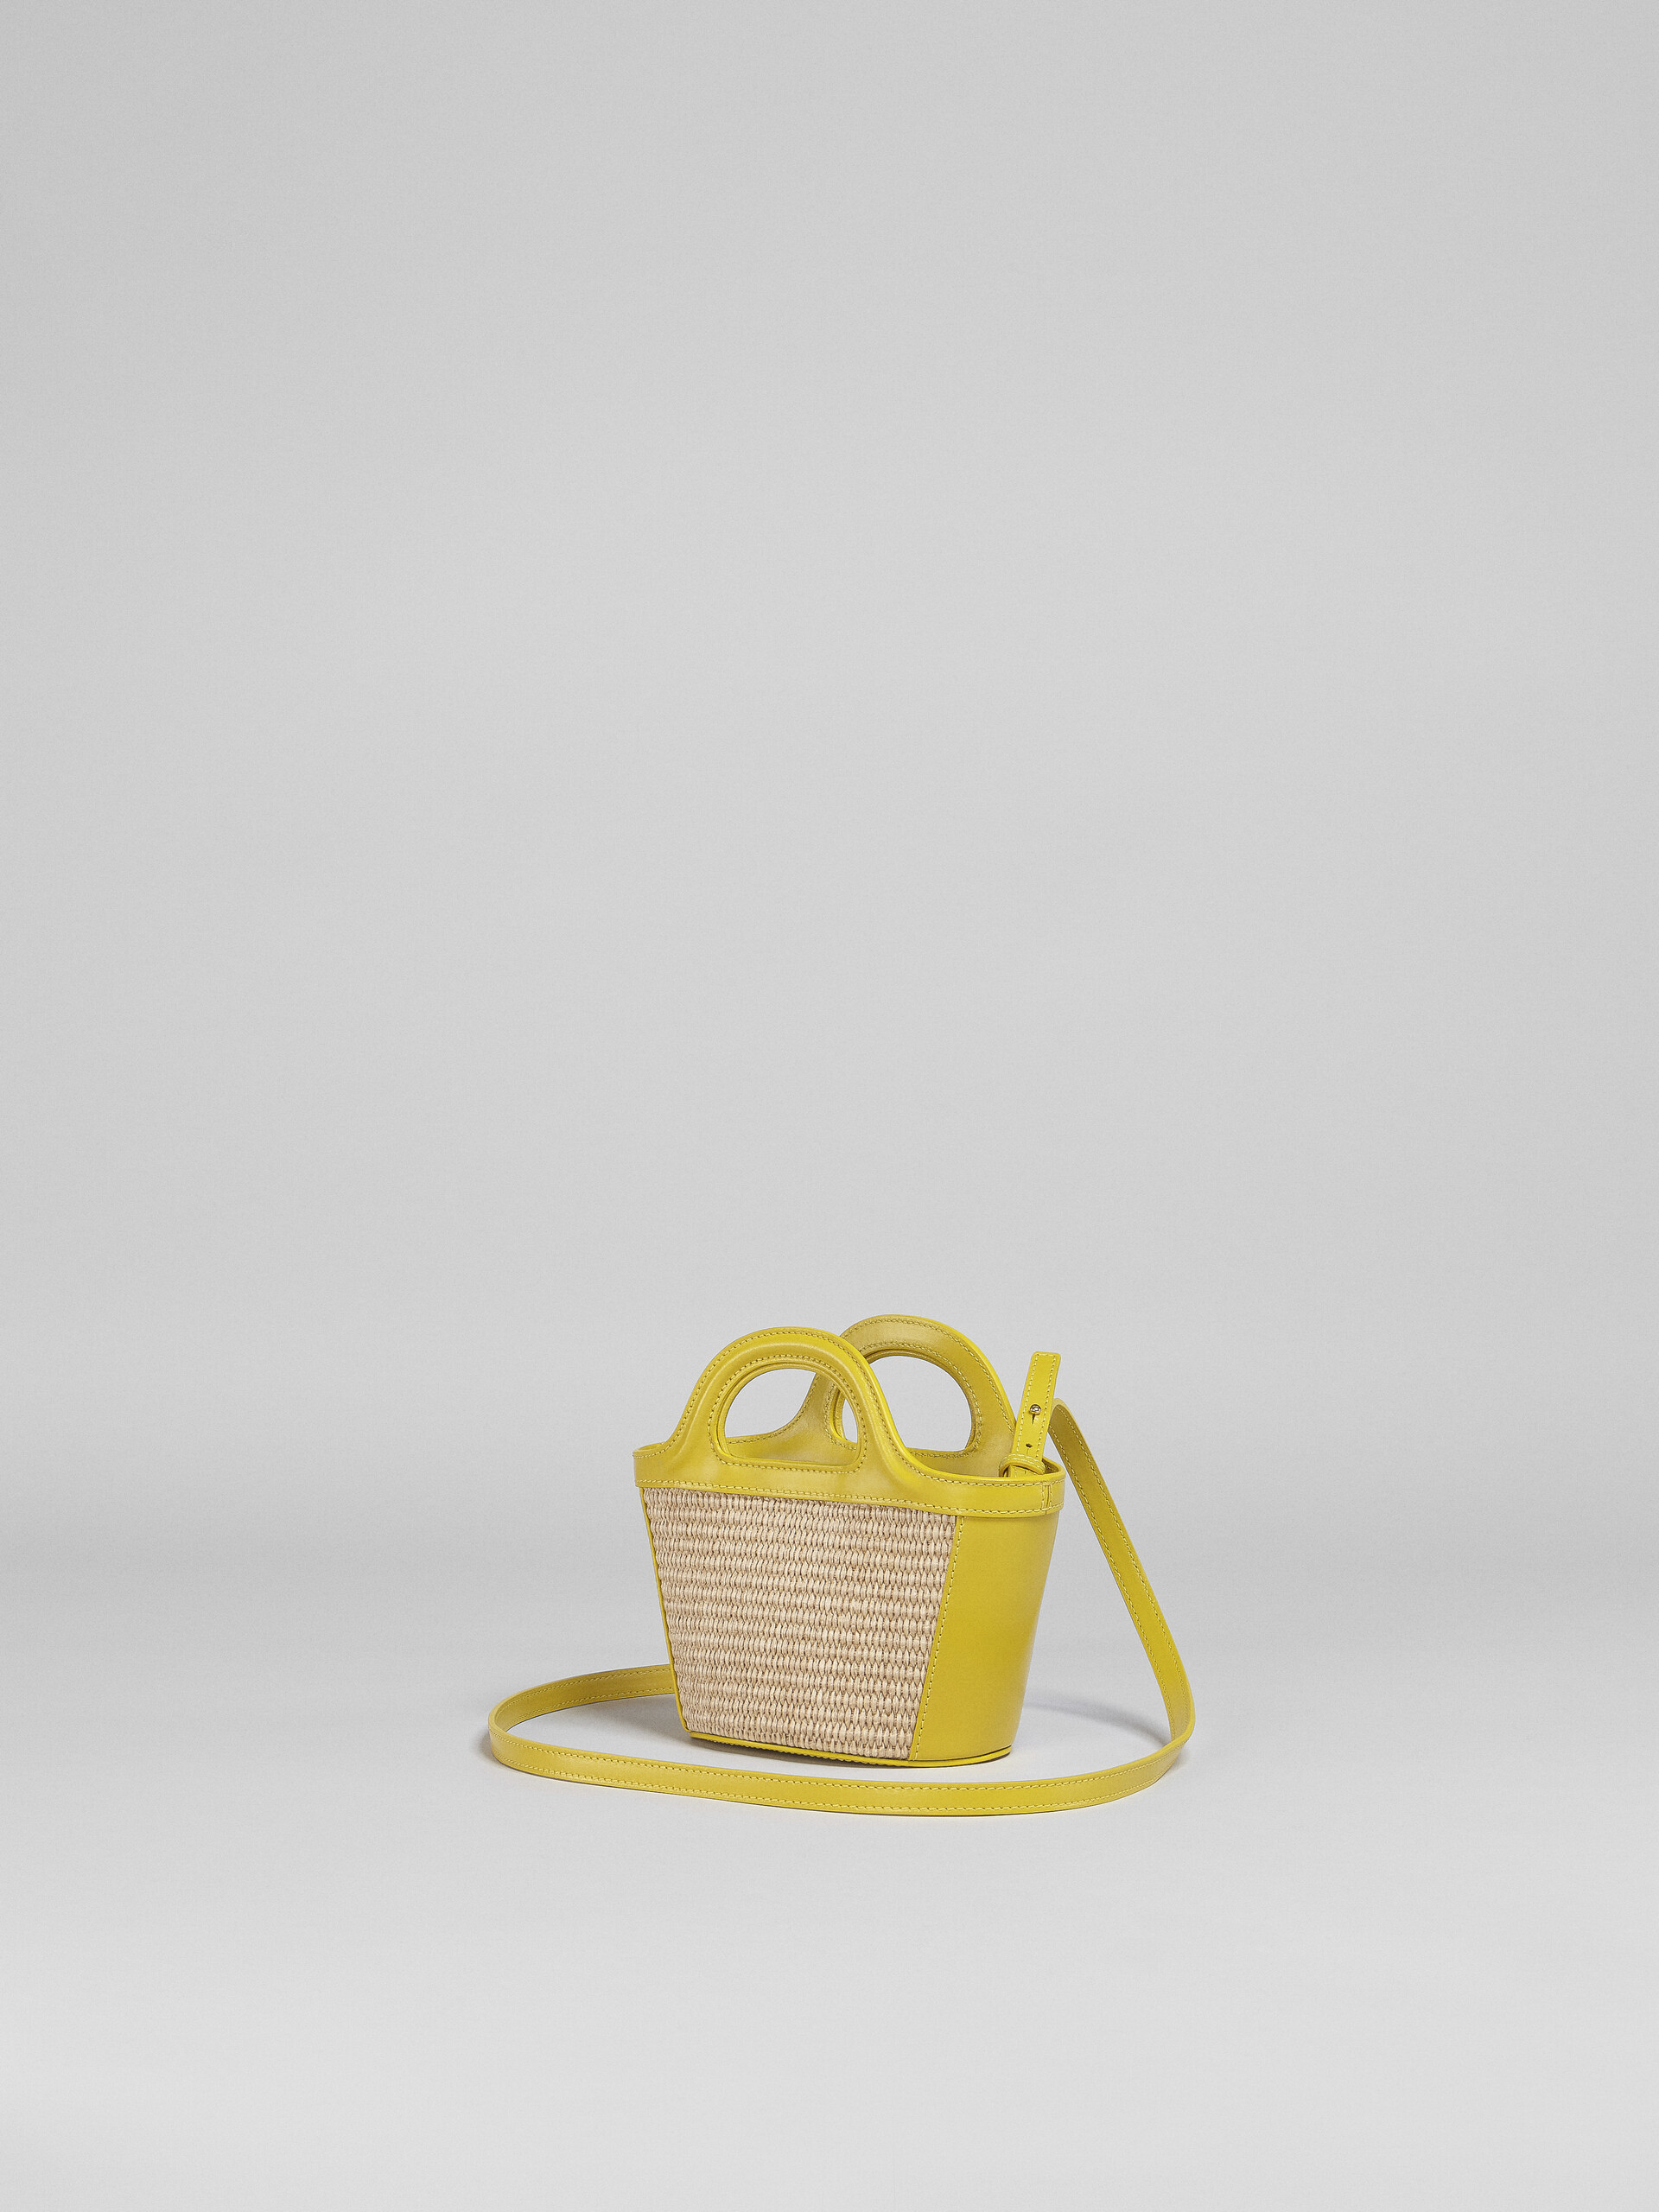 TROPICALIA micro bag in yellow leather and raffia - Handbags - Image 2